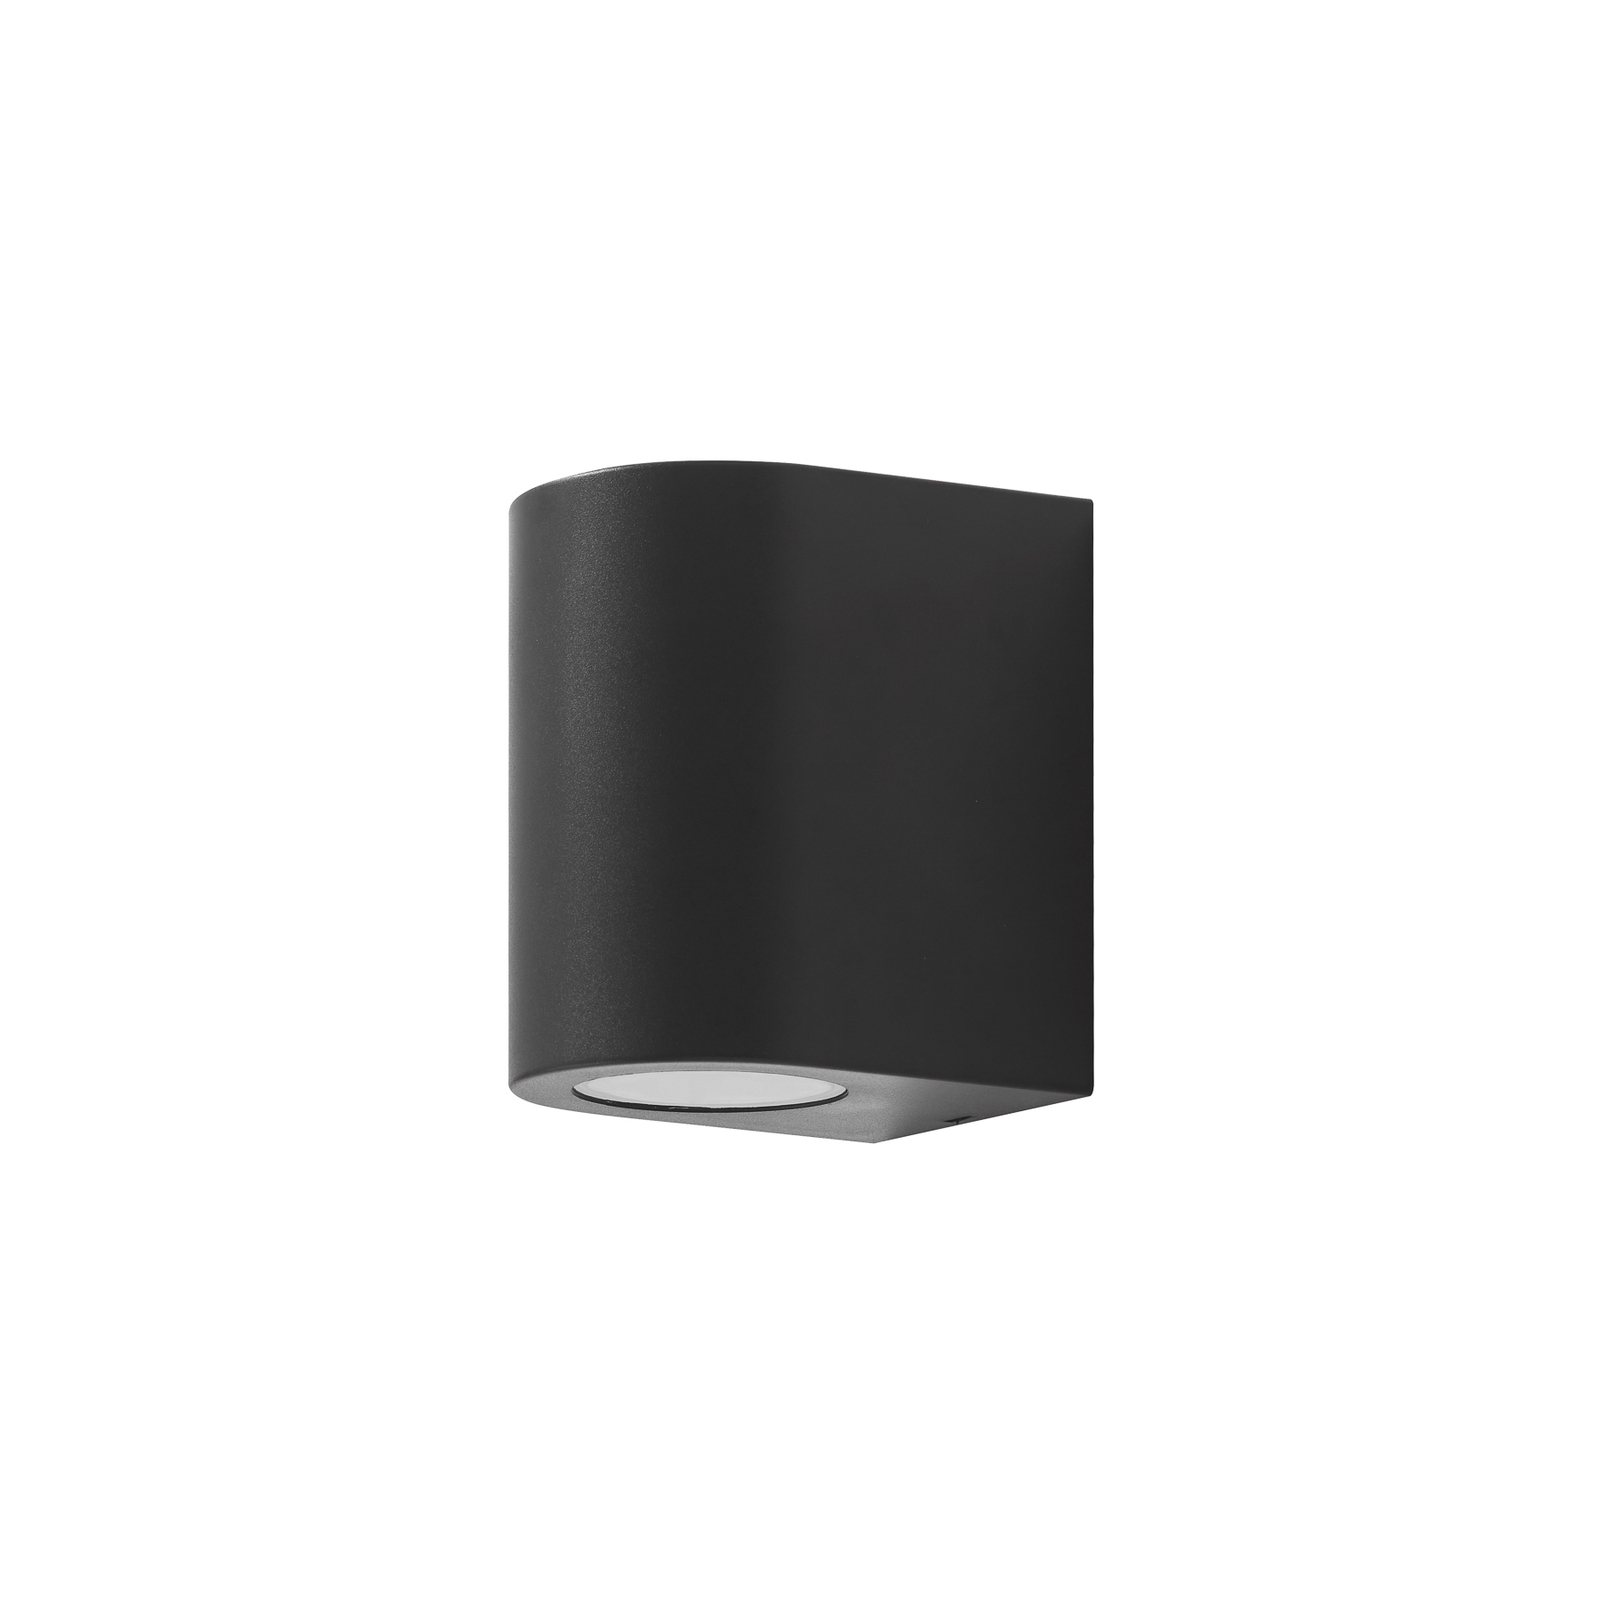 Prios Irfan outdoor wall light round black 10 cm